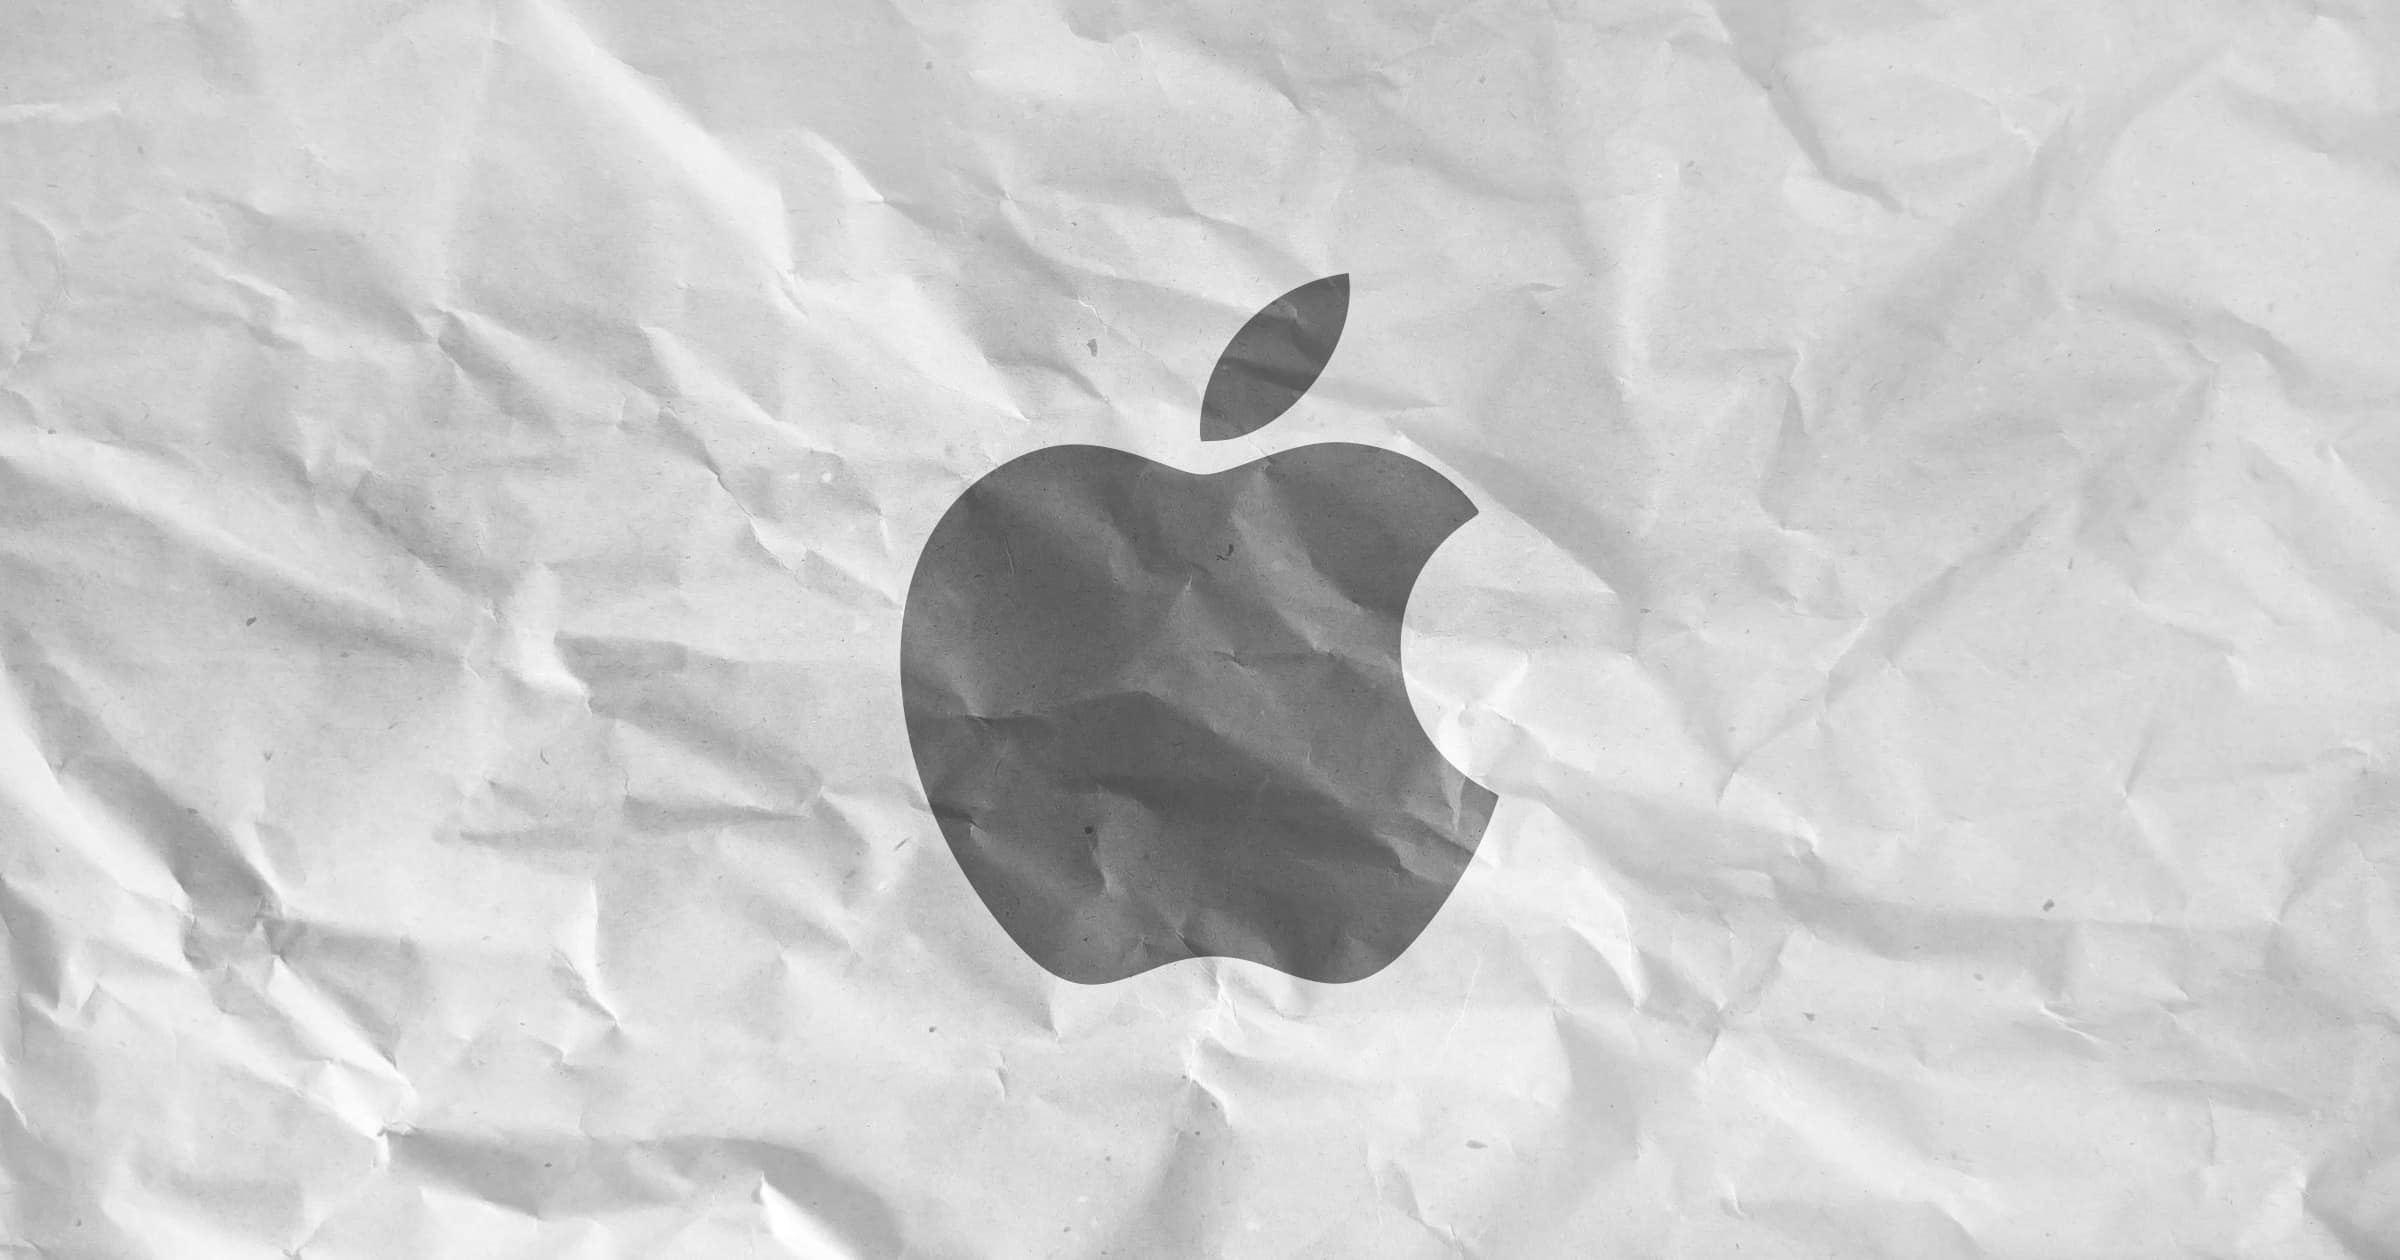 German Antitrust Watchdog Launches Investigation into Apple